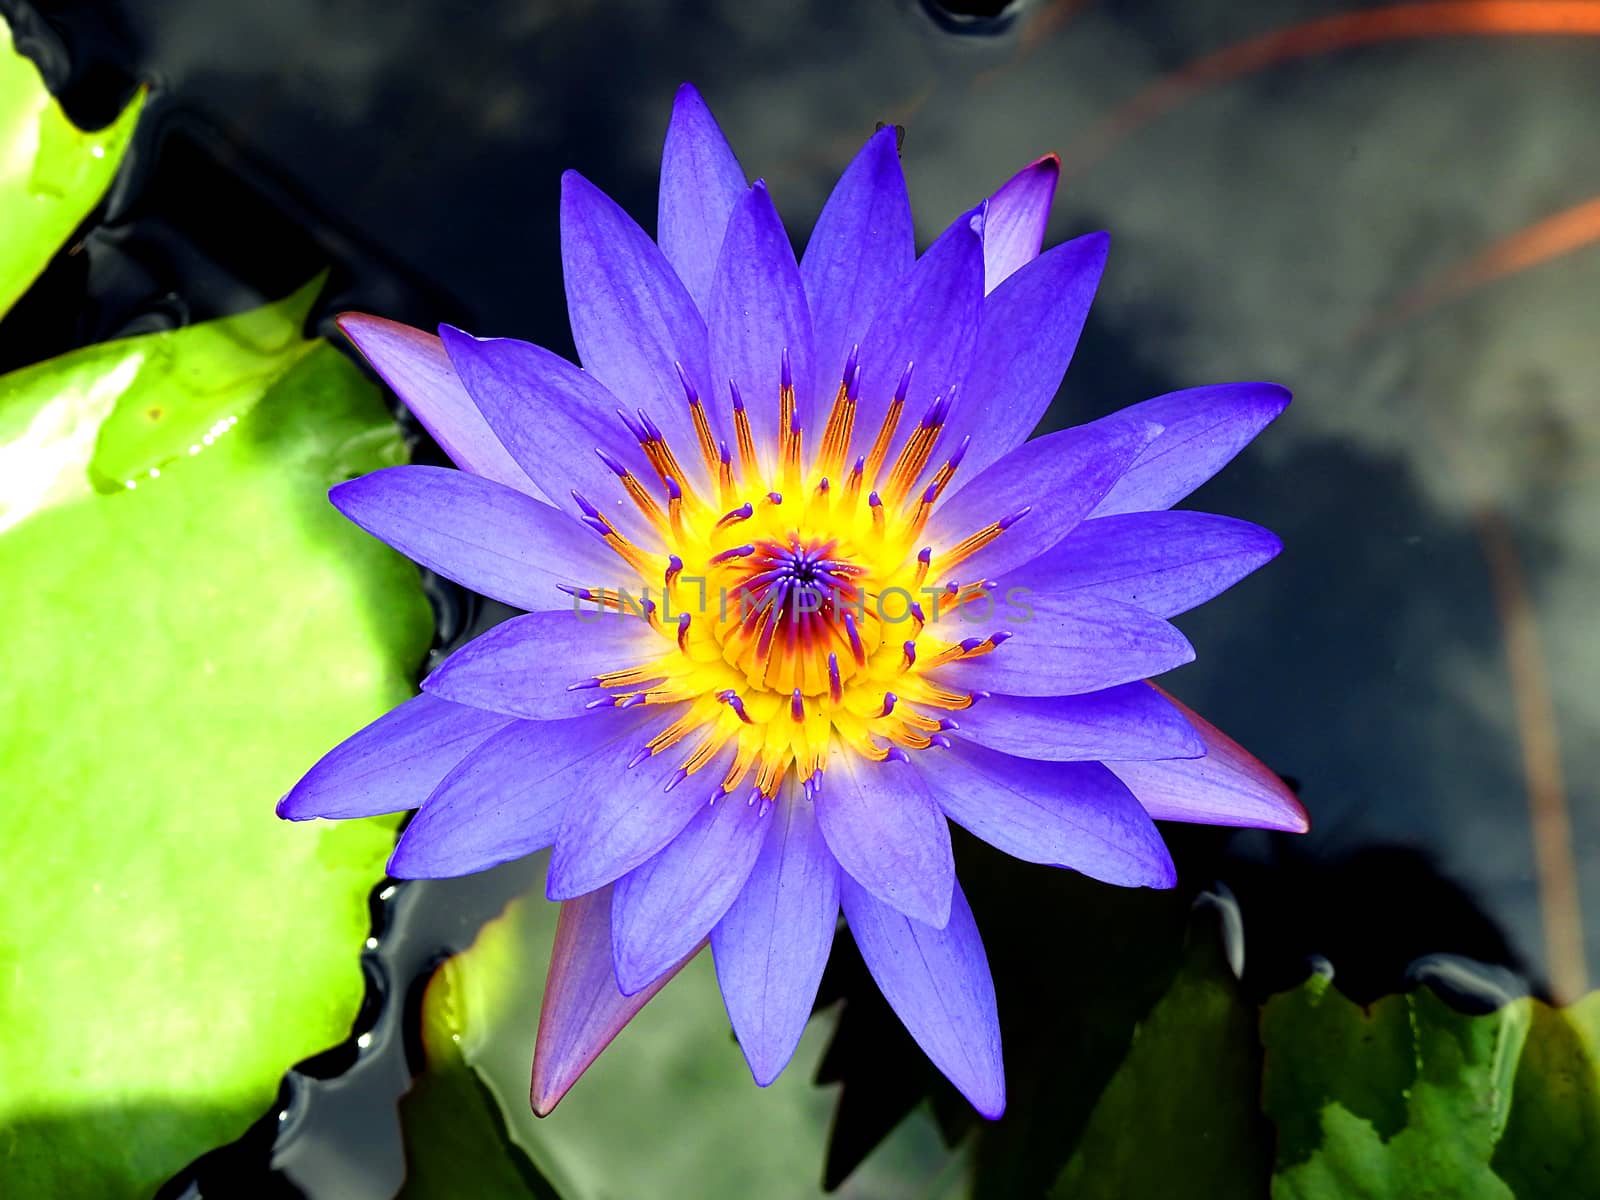 One purple lotus flower on swimming pool.